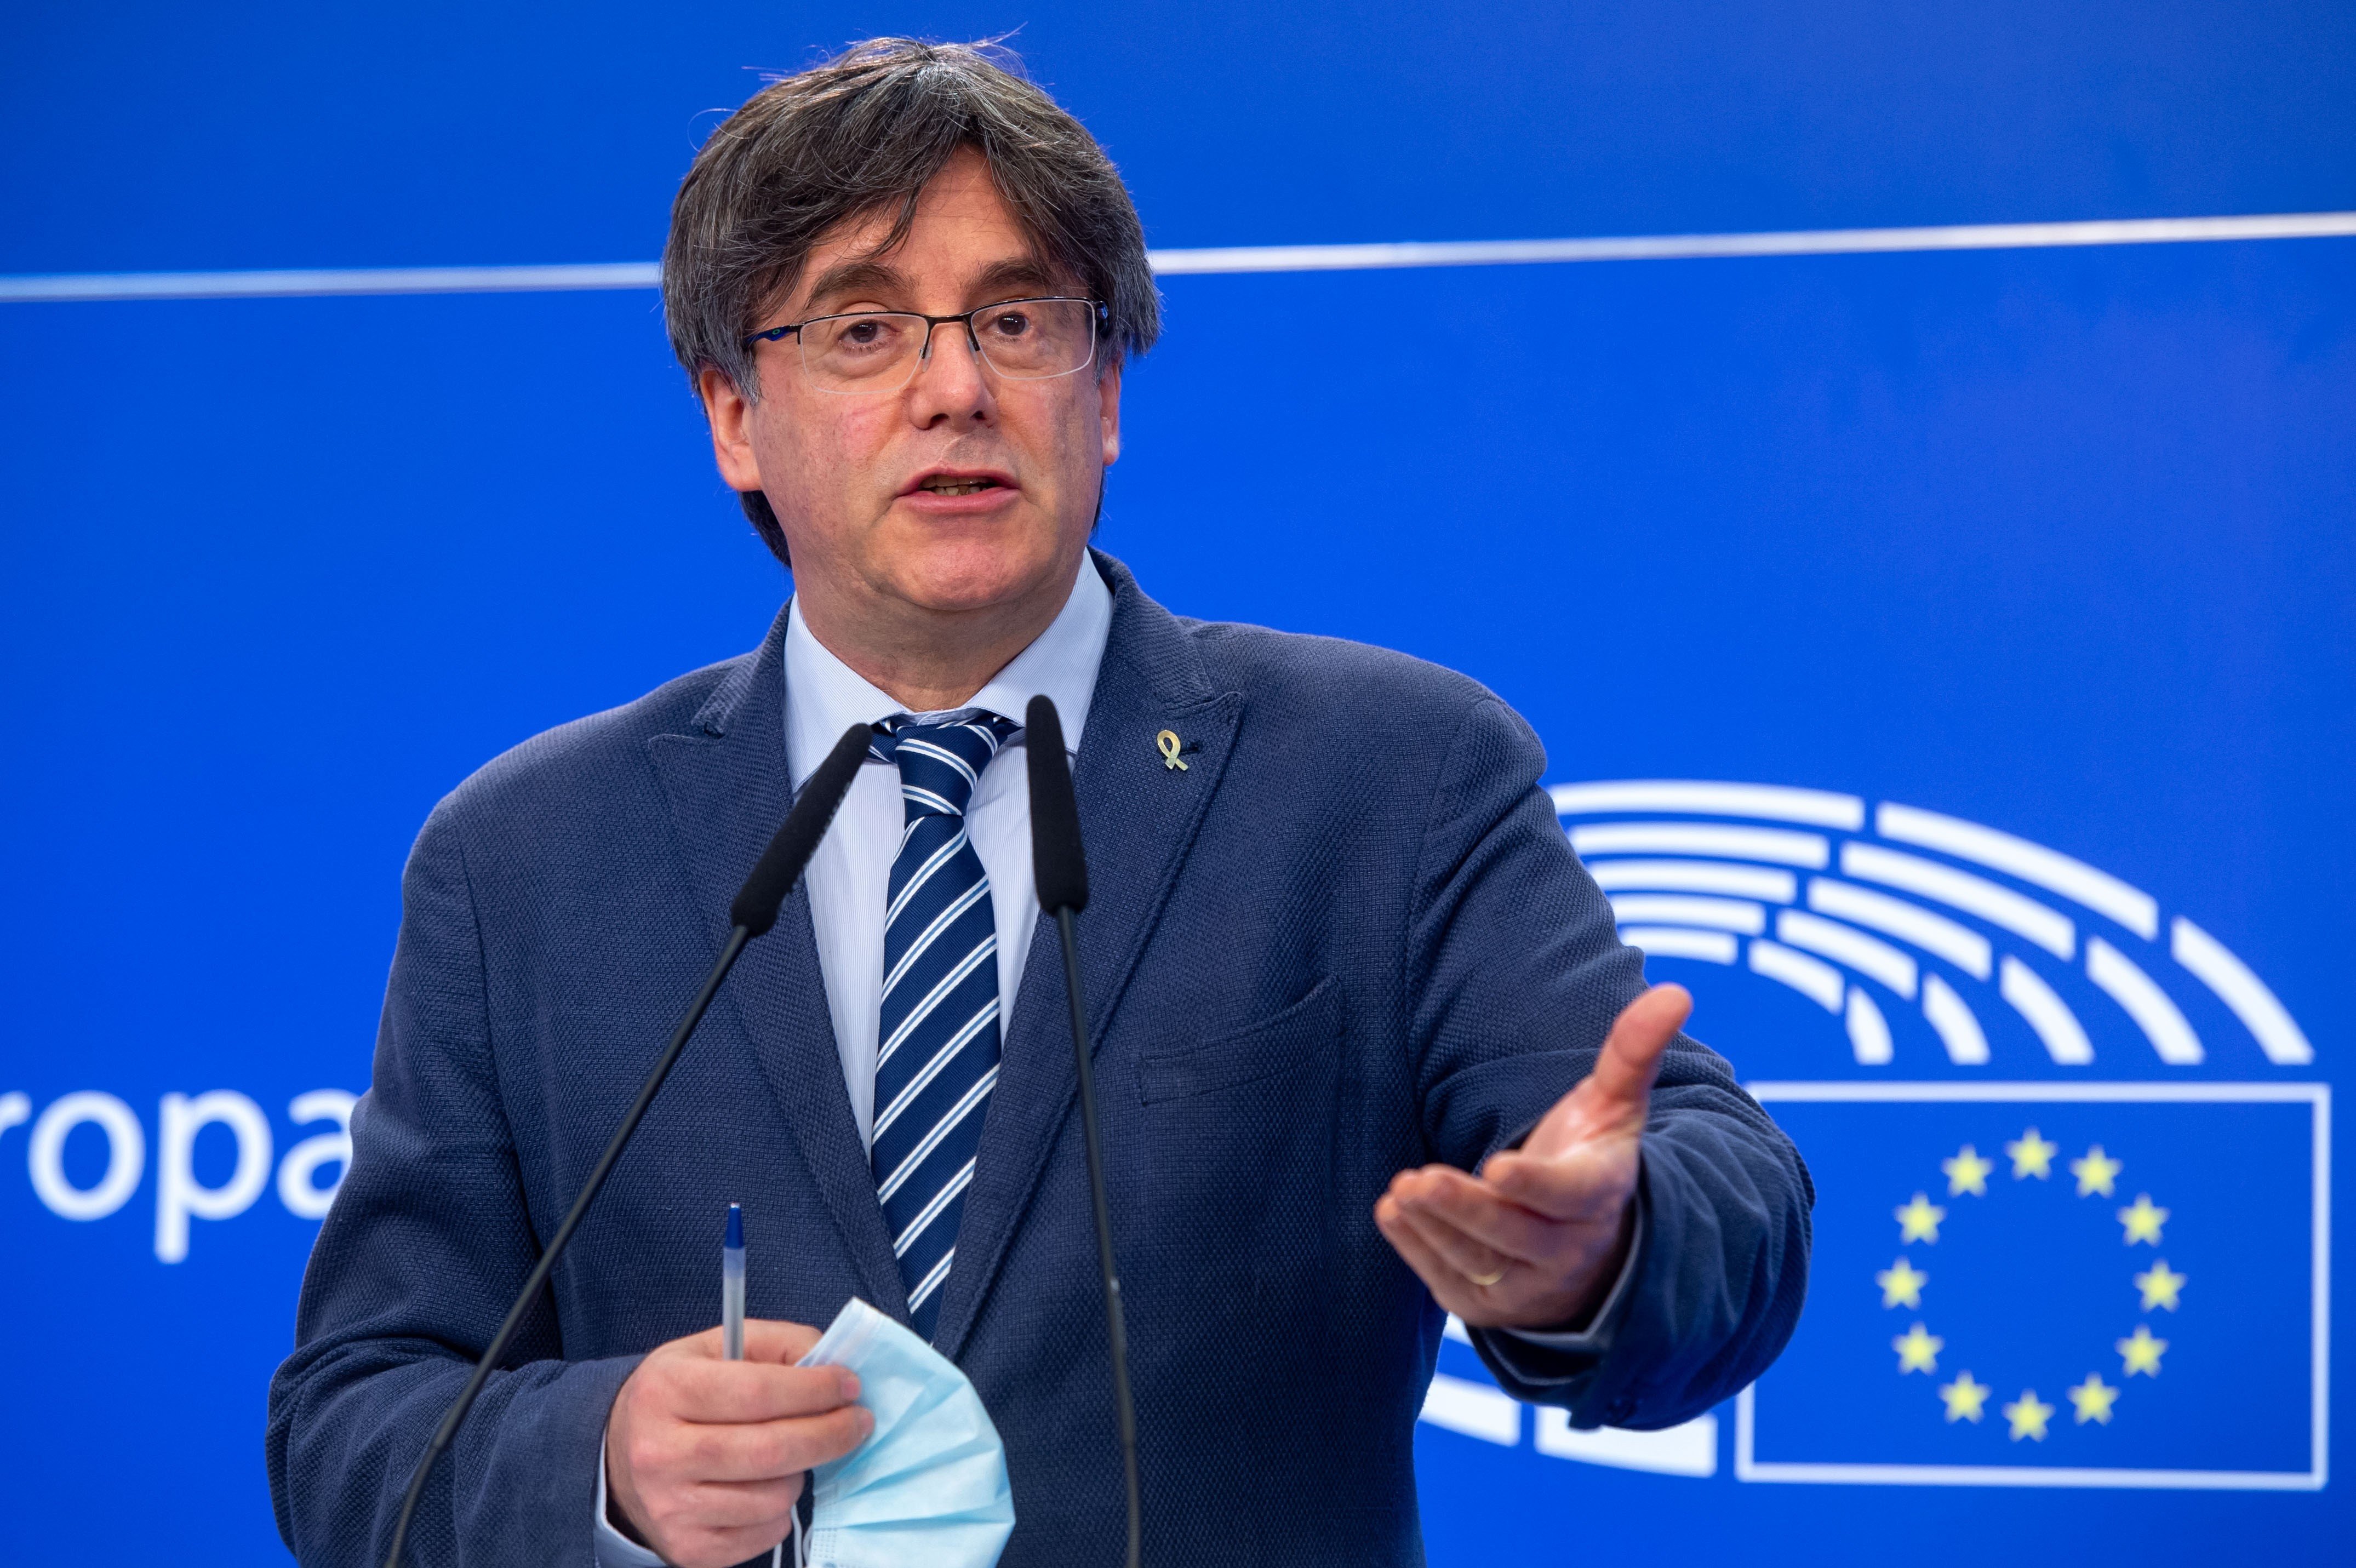 Puigdemont appeals €2 million Court of Accounts demand, asserting immunity as an MEP